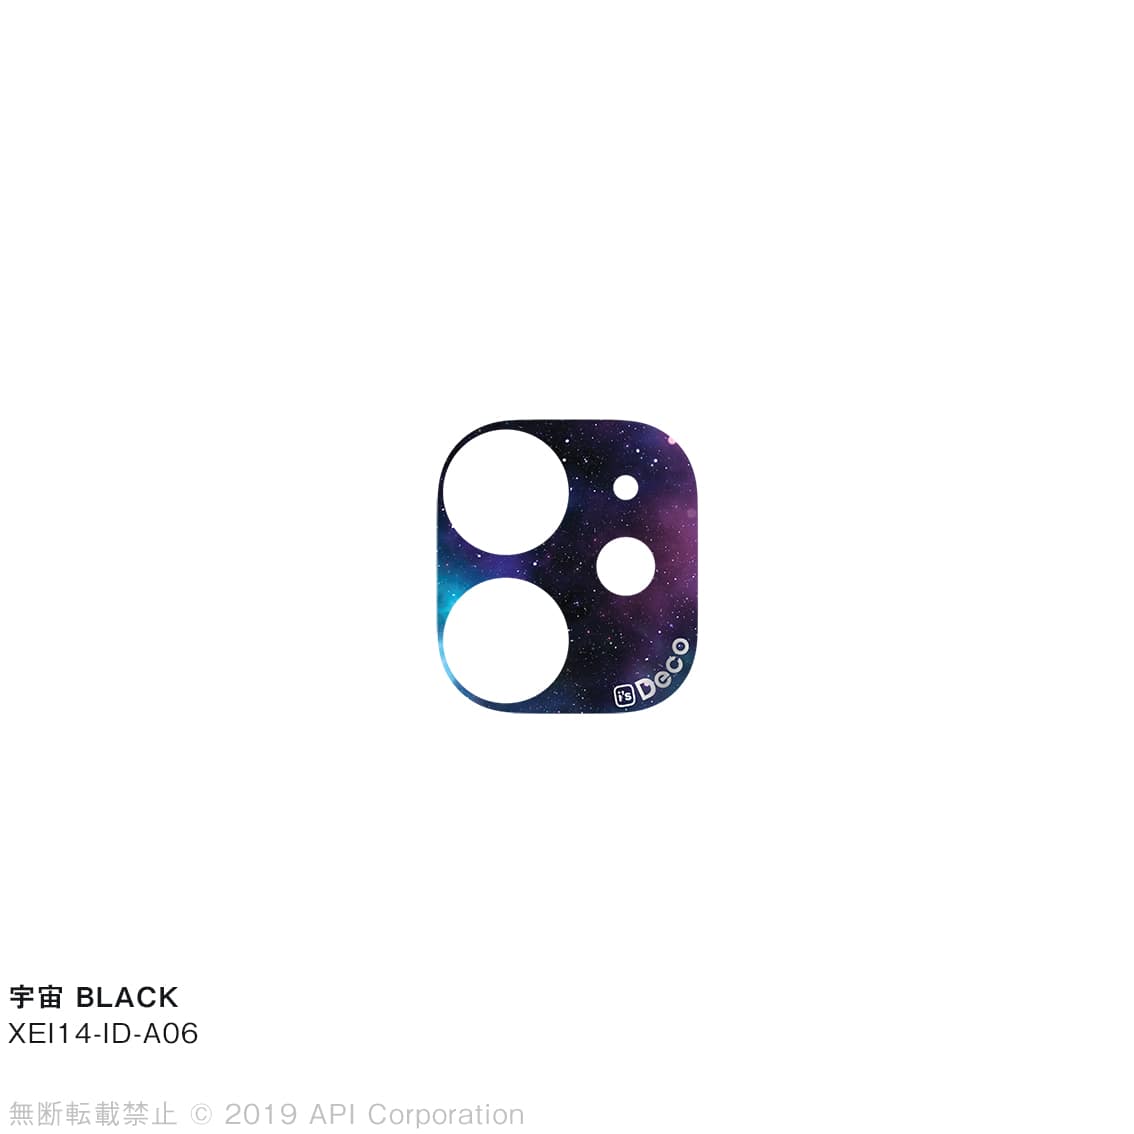 iPhone 11  i's Deco [PATTERN (A05-A08)］